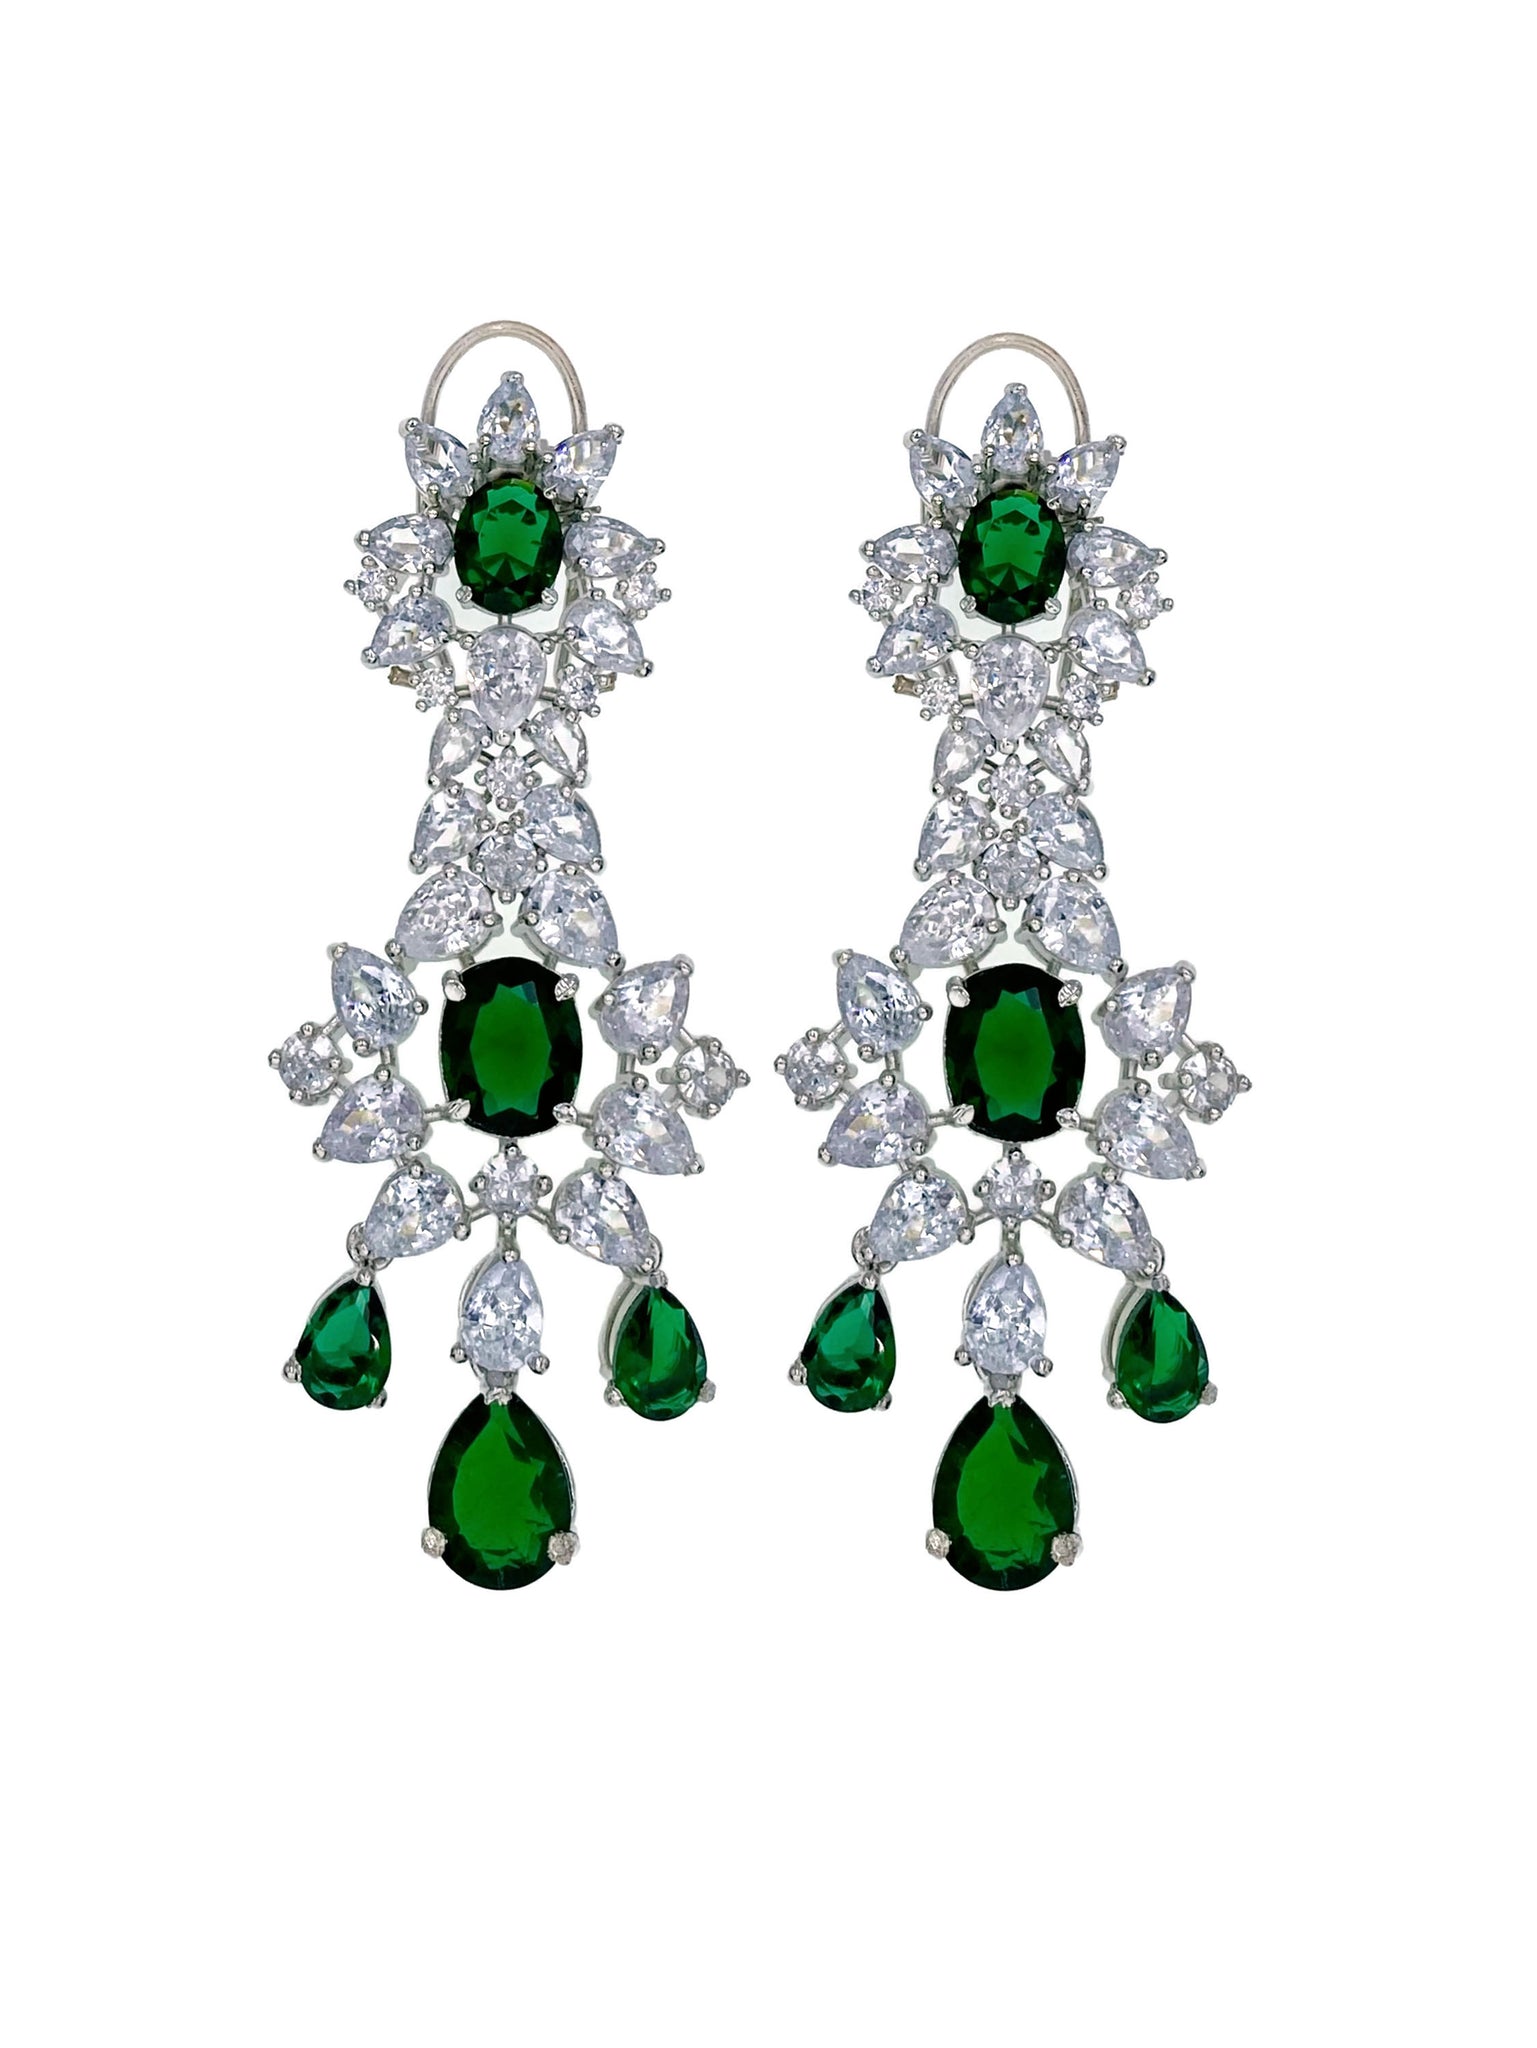 Emerald Green Diamondesque Jeweled Earrings close up